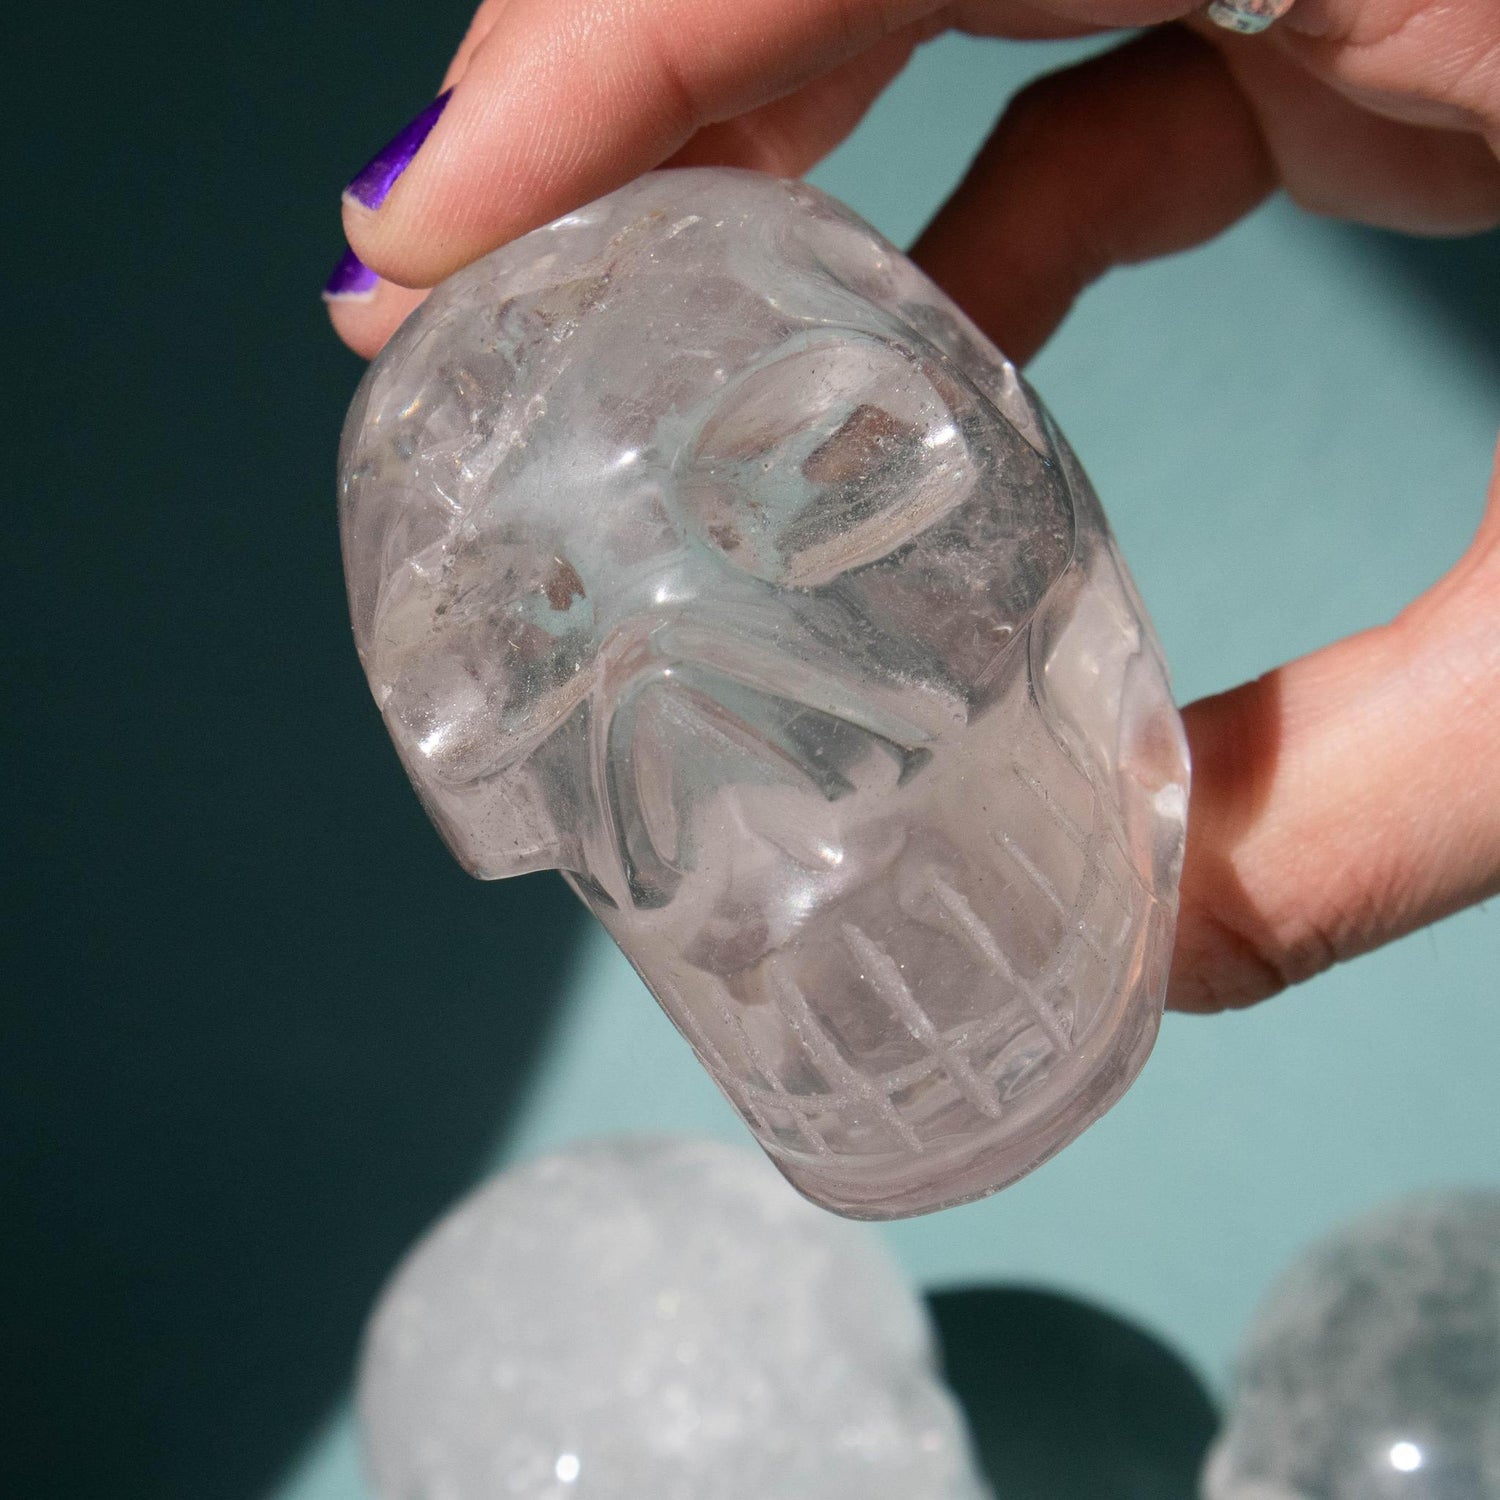 clear quartz, clear quartz skull, crystal skull, clear quartz crystal, clear quartz stone, clear quartz properties, clear quartz healing properties, clear quartz metaphysical properties, clear quartz meaning